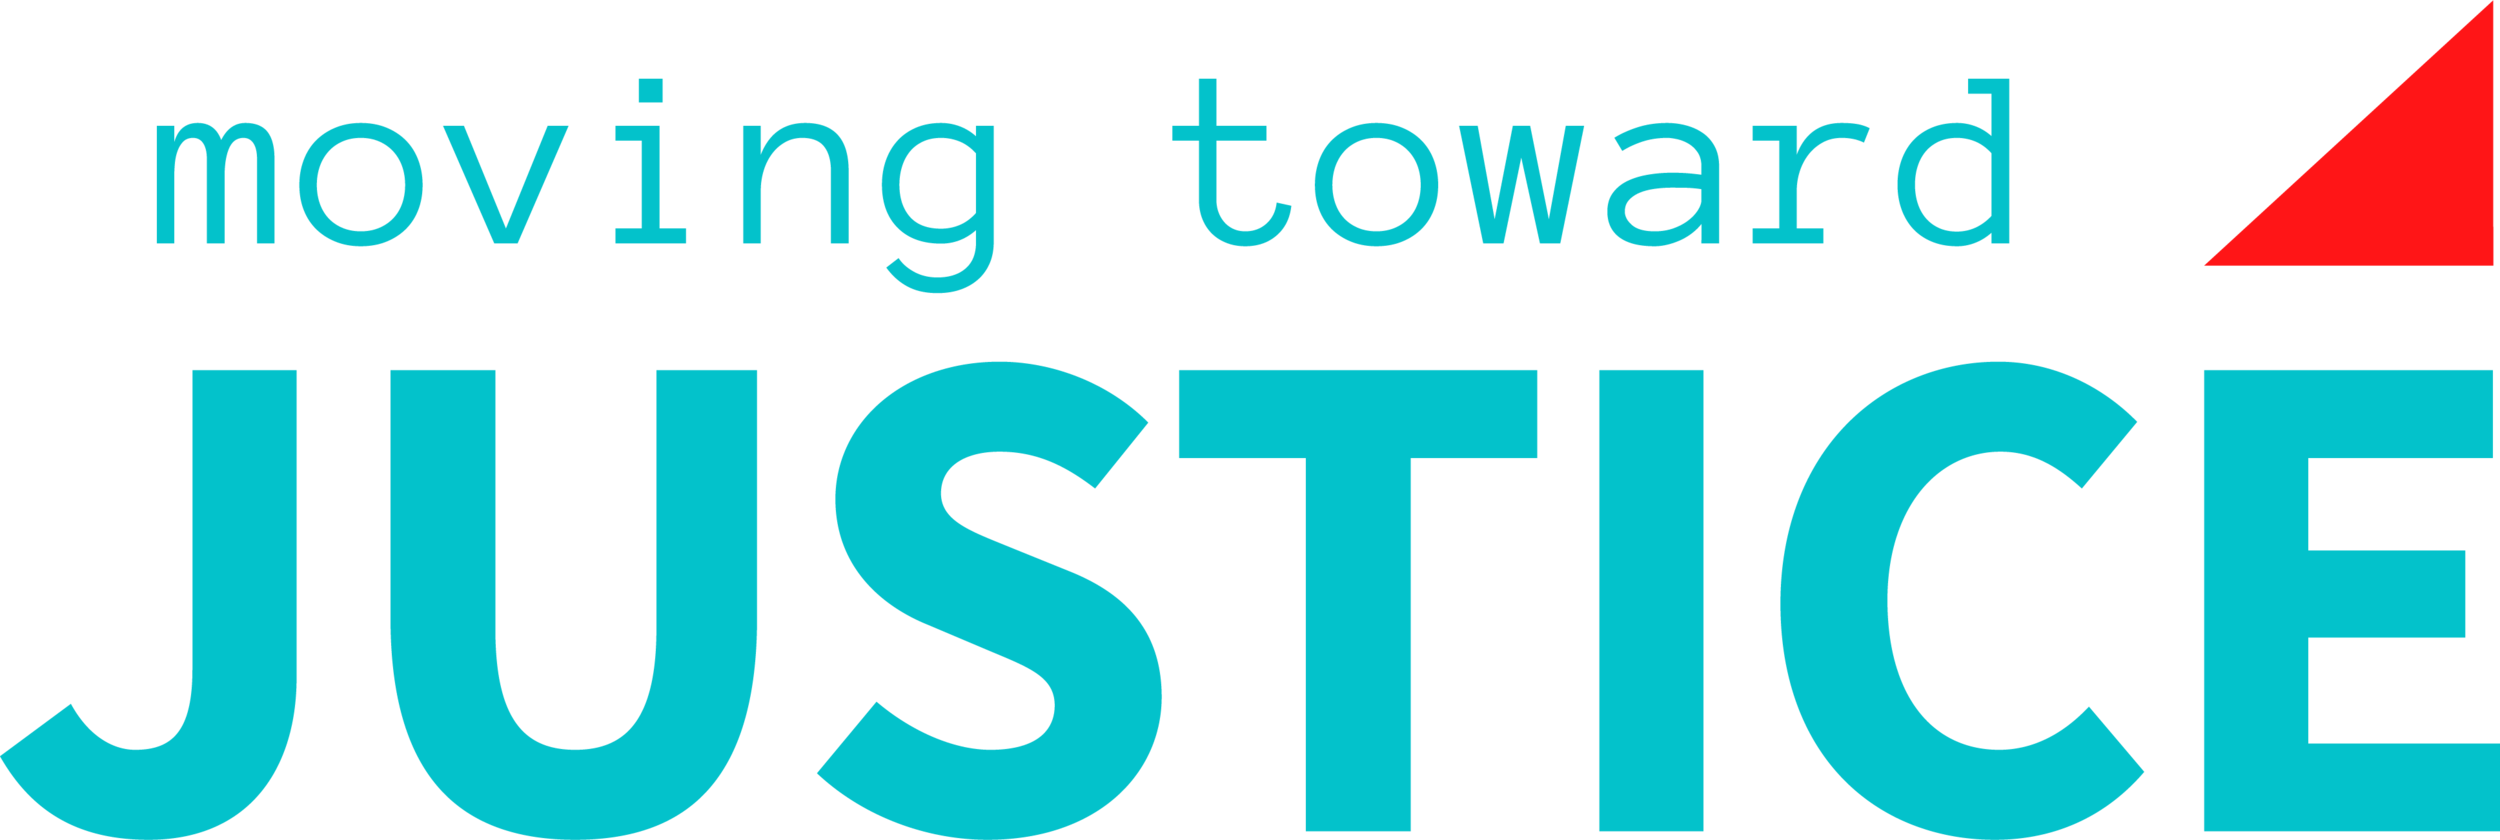 Moving Toward Justice logo